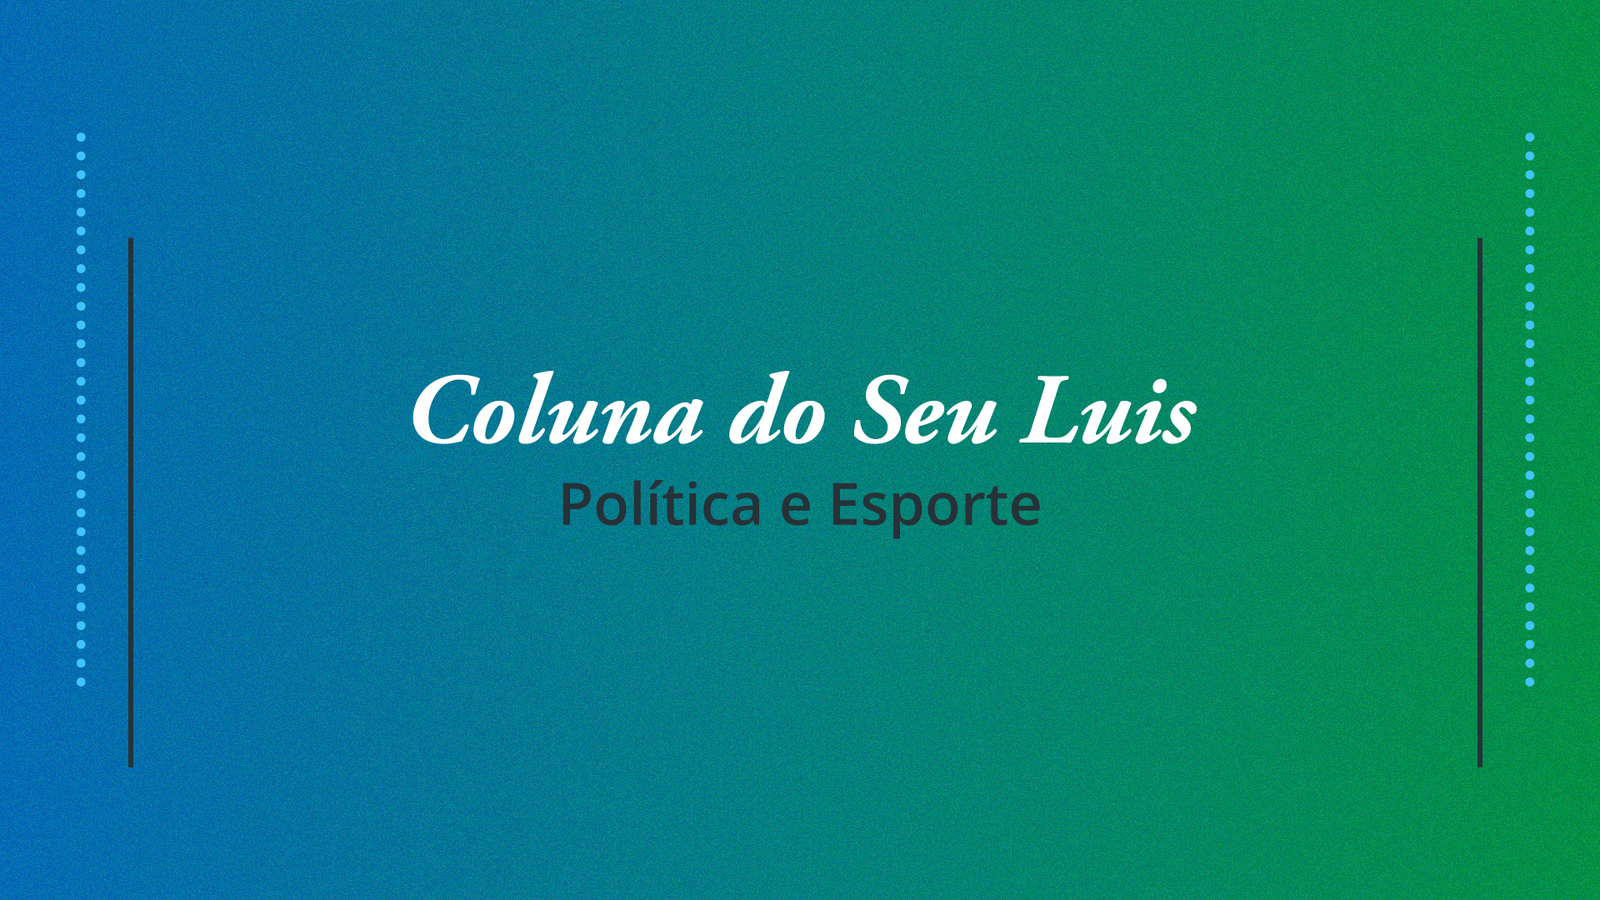 Coluna do Seu Luis — confira os destaques da política e esporte nesta sexta-feira (26/07)